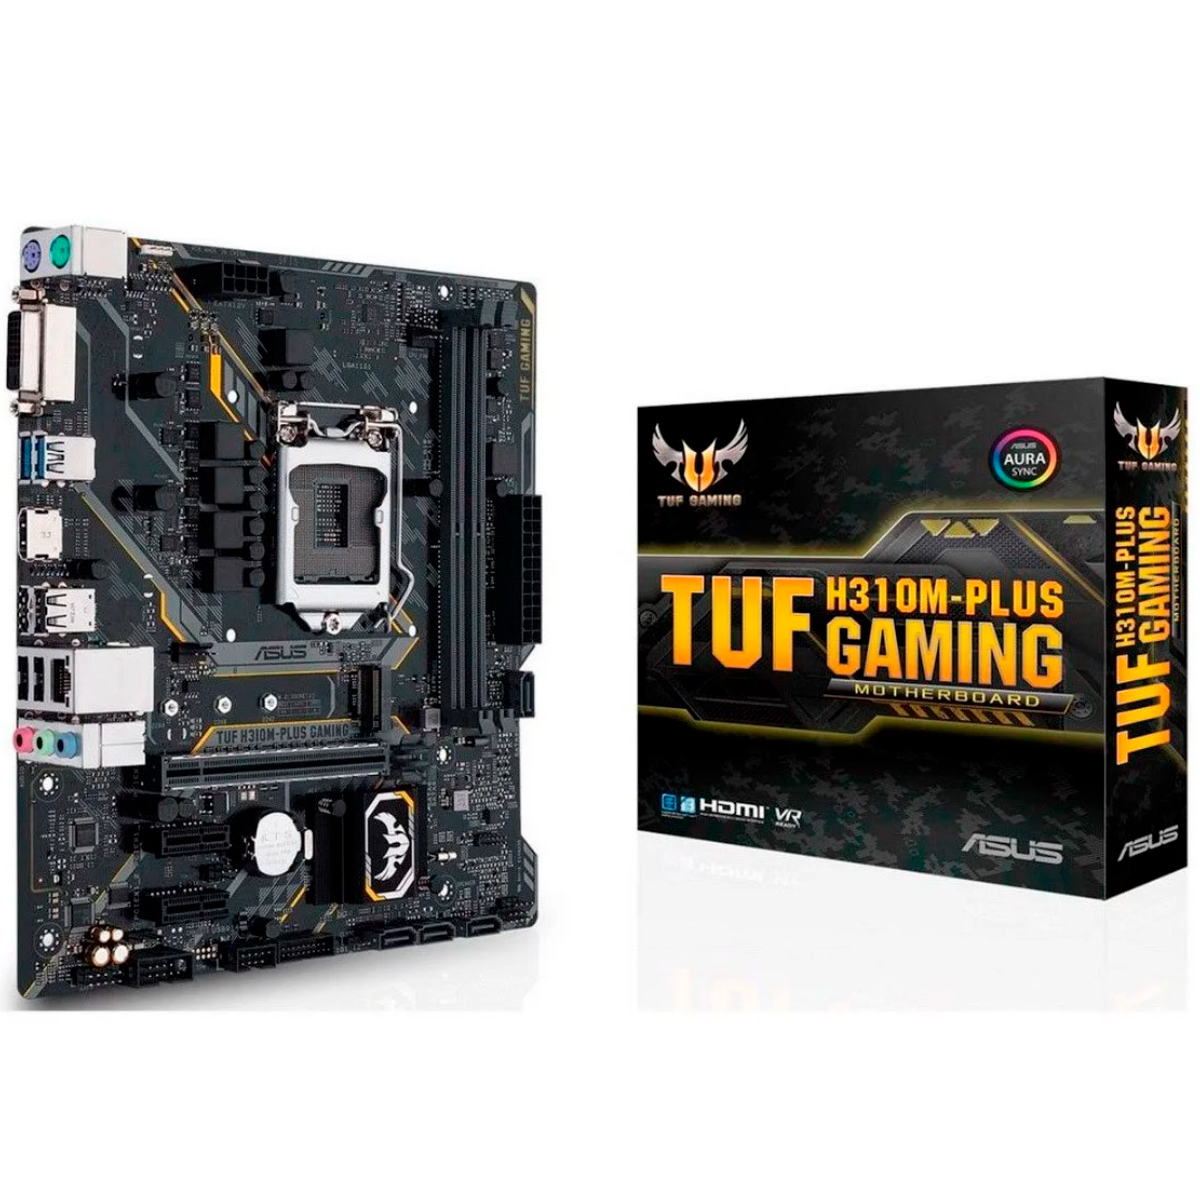 Asus TUF H310M PLUS GAMING/BR (LGA 1151 - DDR4 2666) - Chipset Intel H310 - USB 3.1 - Slot M.2 - Liquidação peça Recertificada